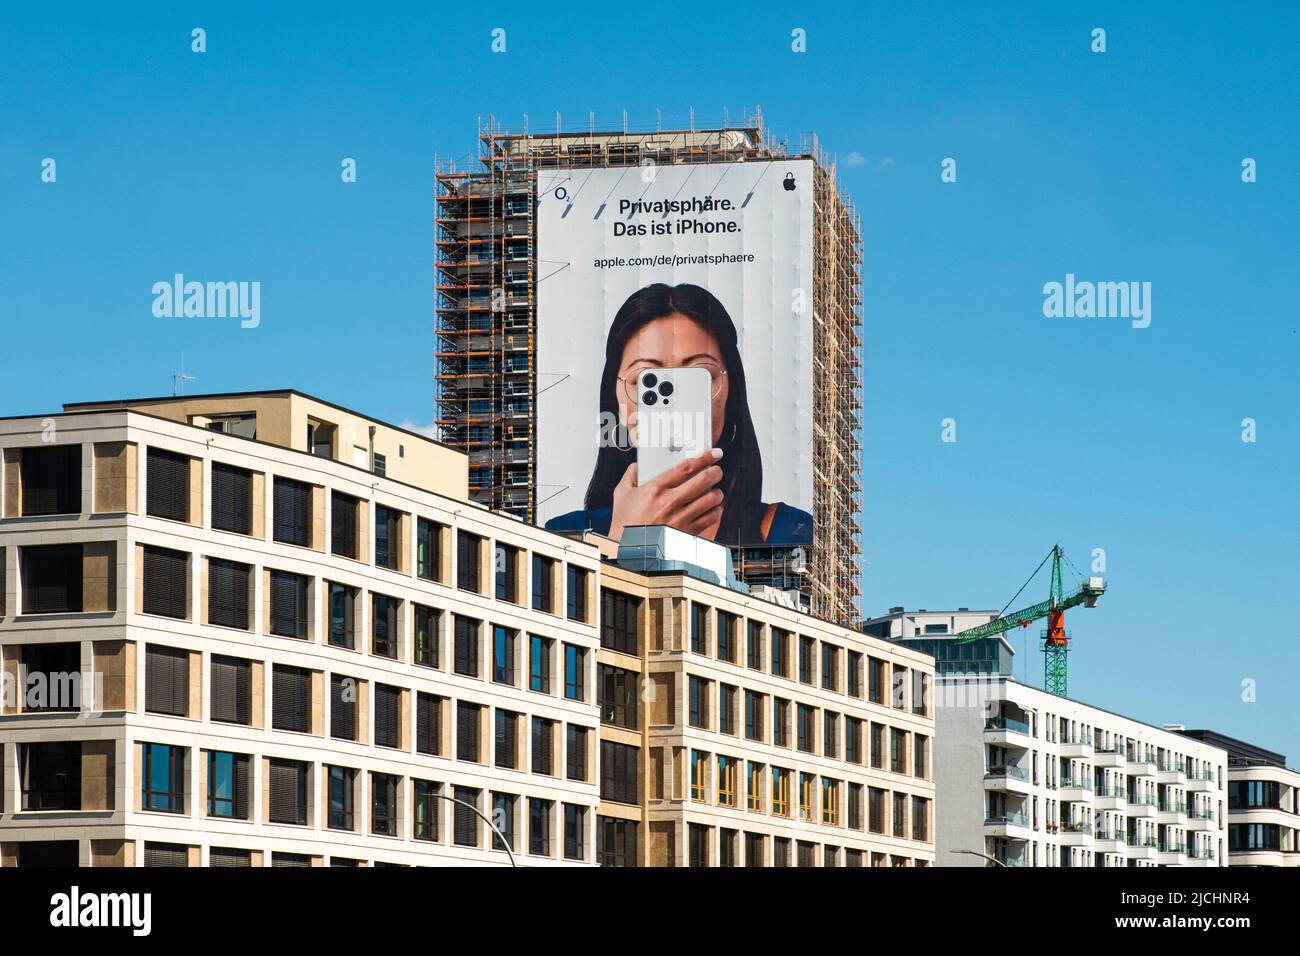 Berlin, Germany -June, 2022: Apple Iphone advertisement on billboard on building facade Stock Photo